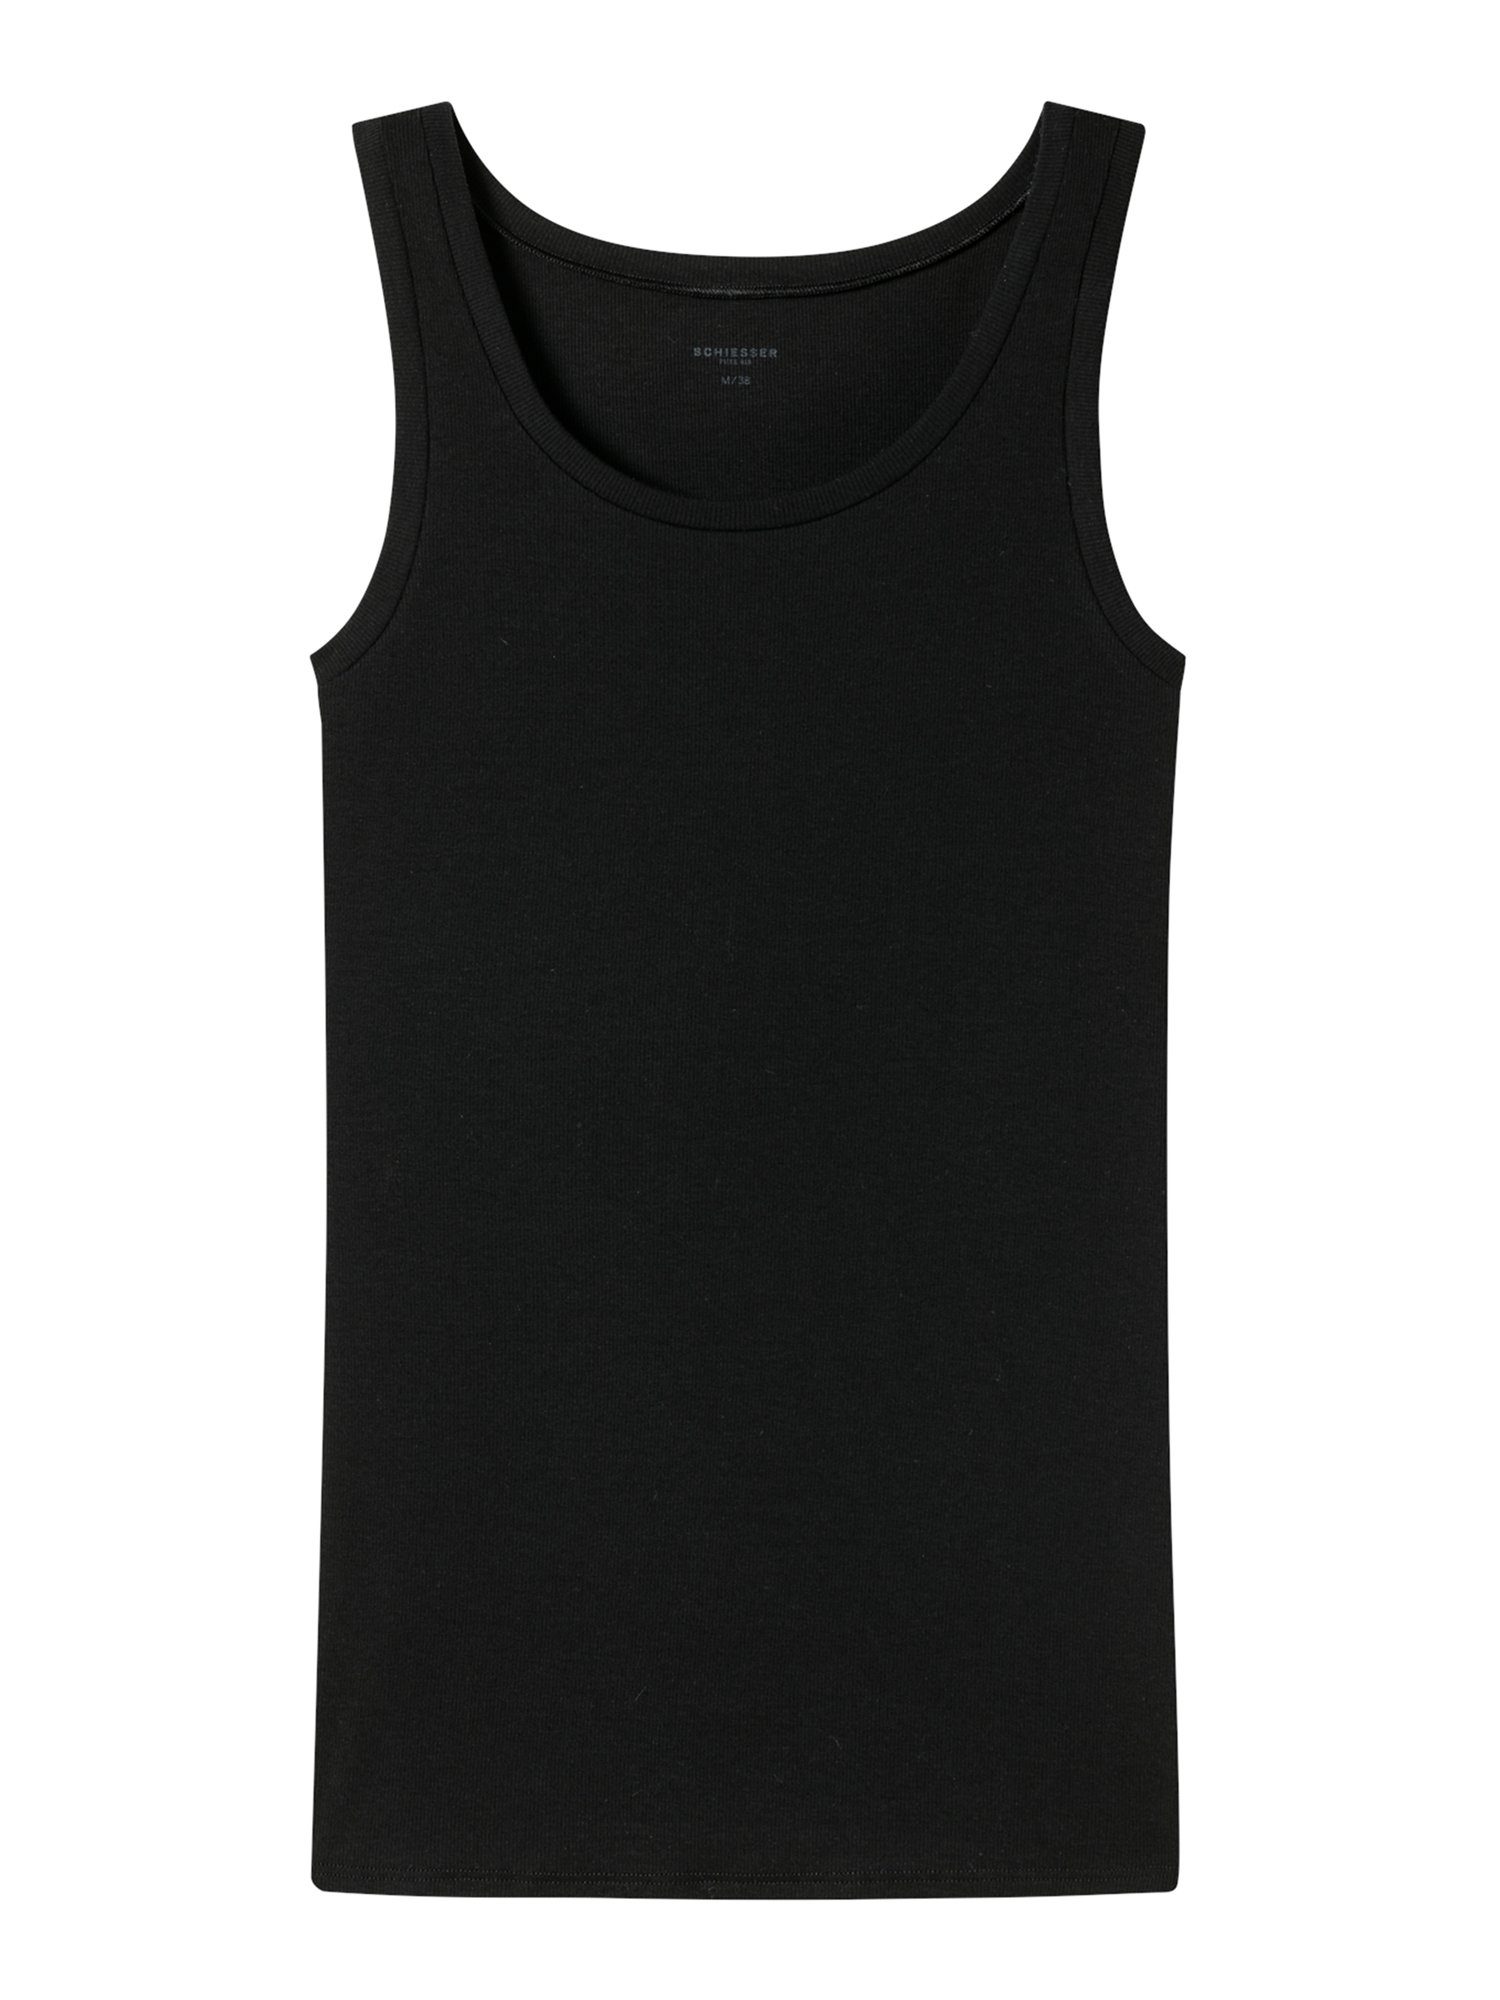 Rib Pure Tank-top schwarz unterzieh-shirt Tanktop unterhemd Schiesser